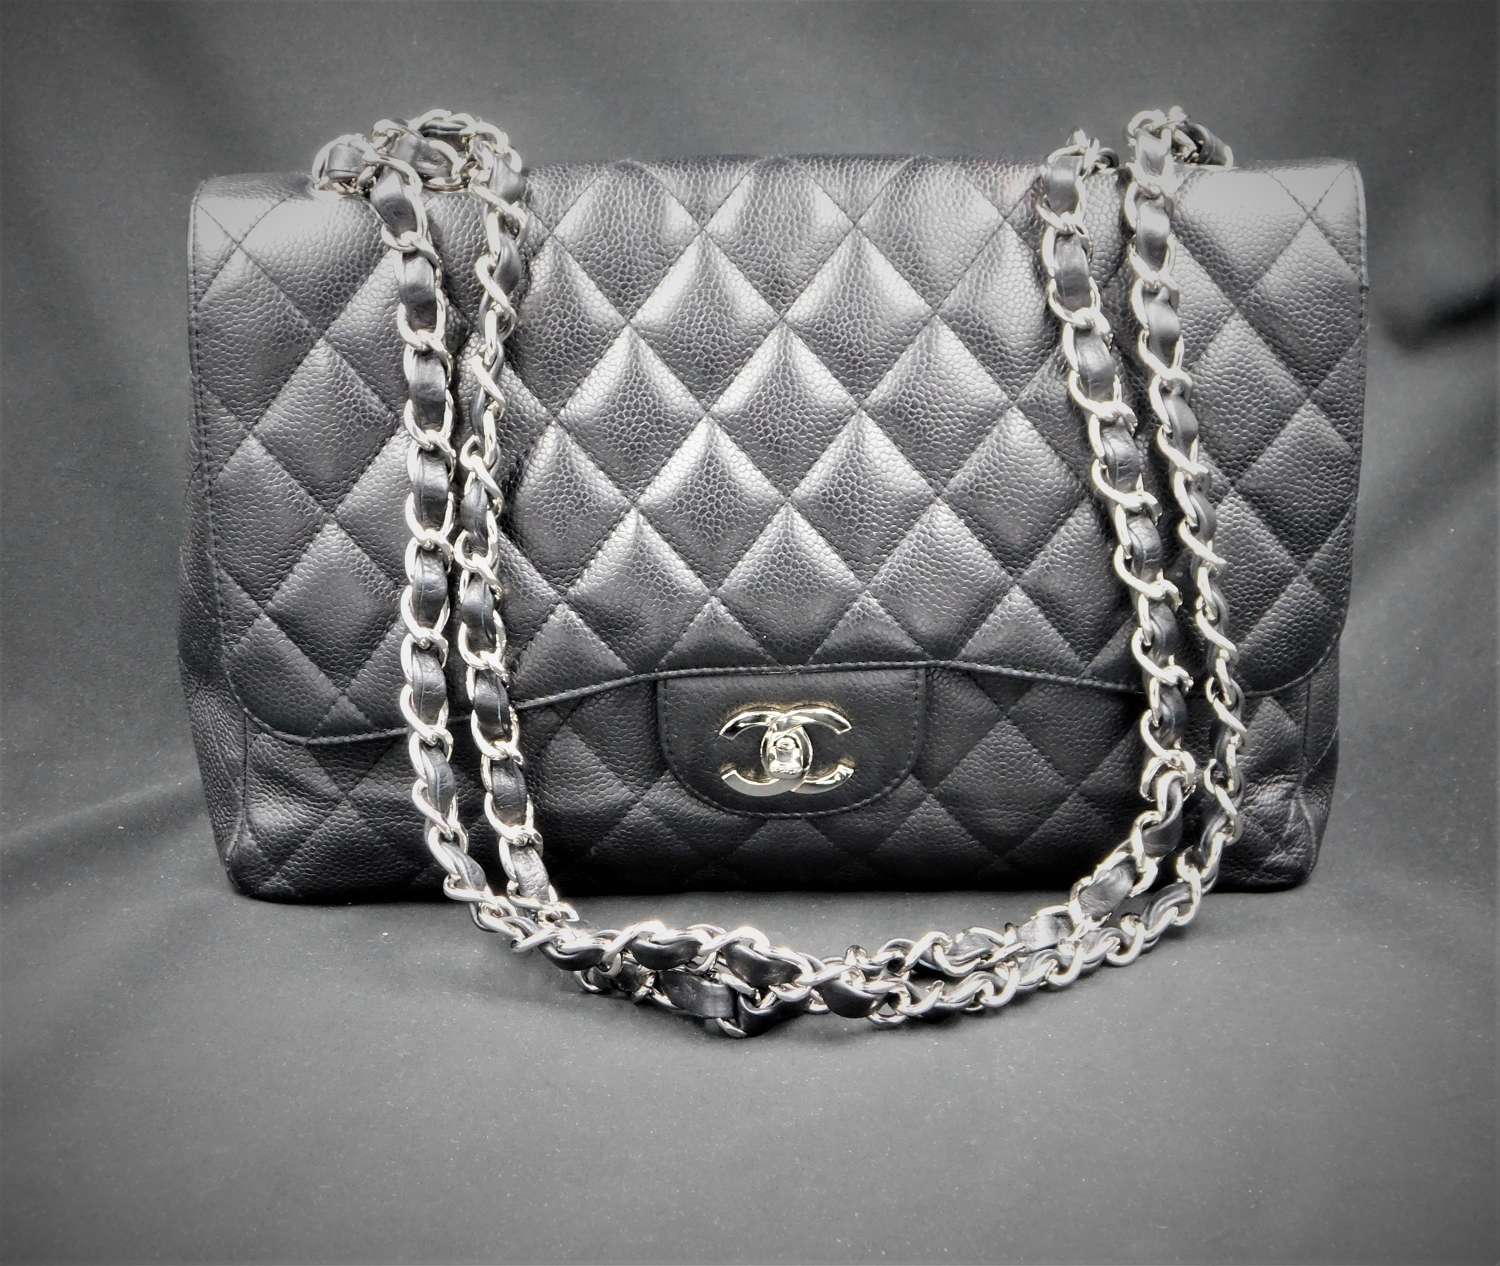 Chanel Classic Jumbo 30 cm Handbag